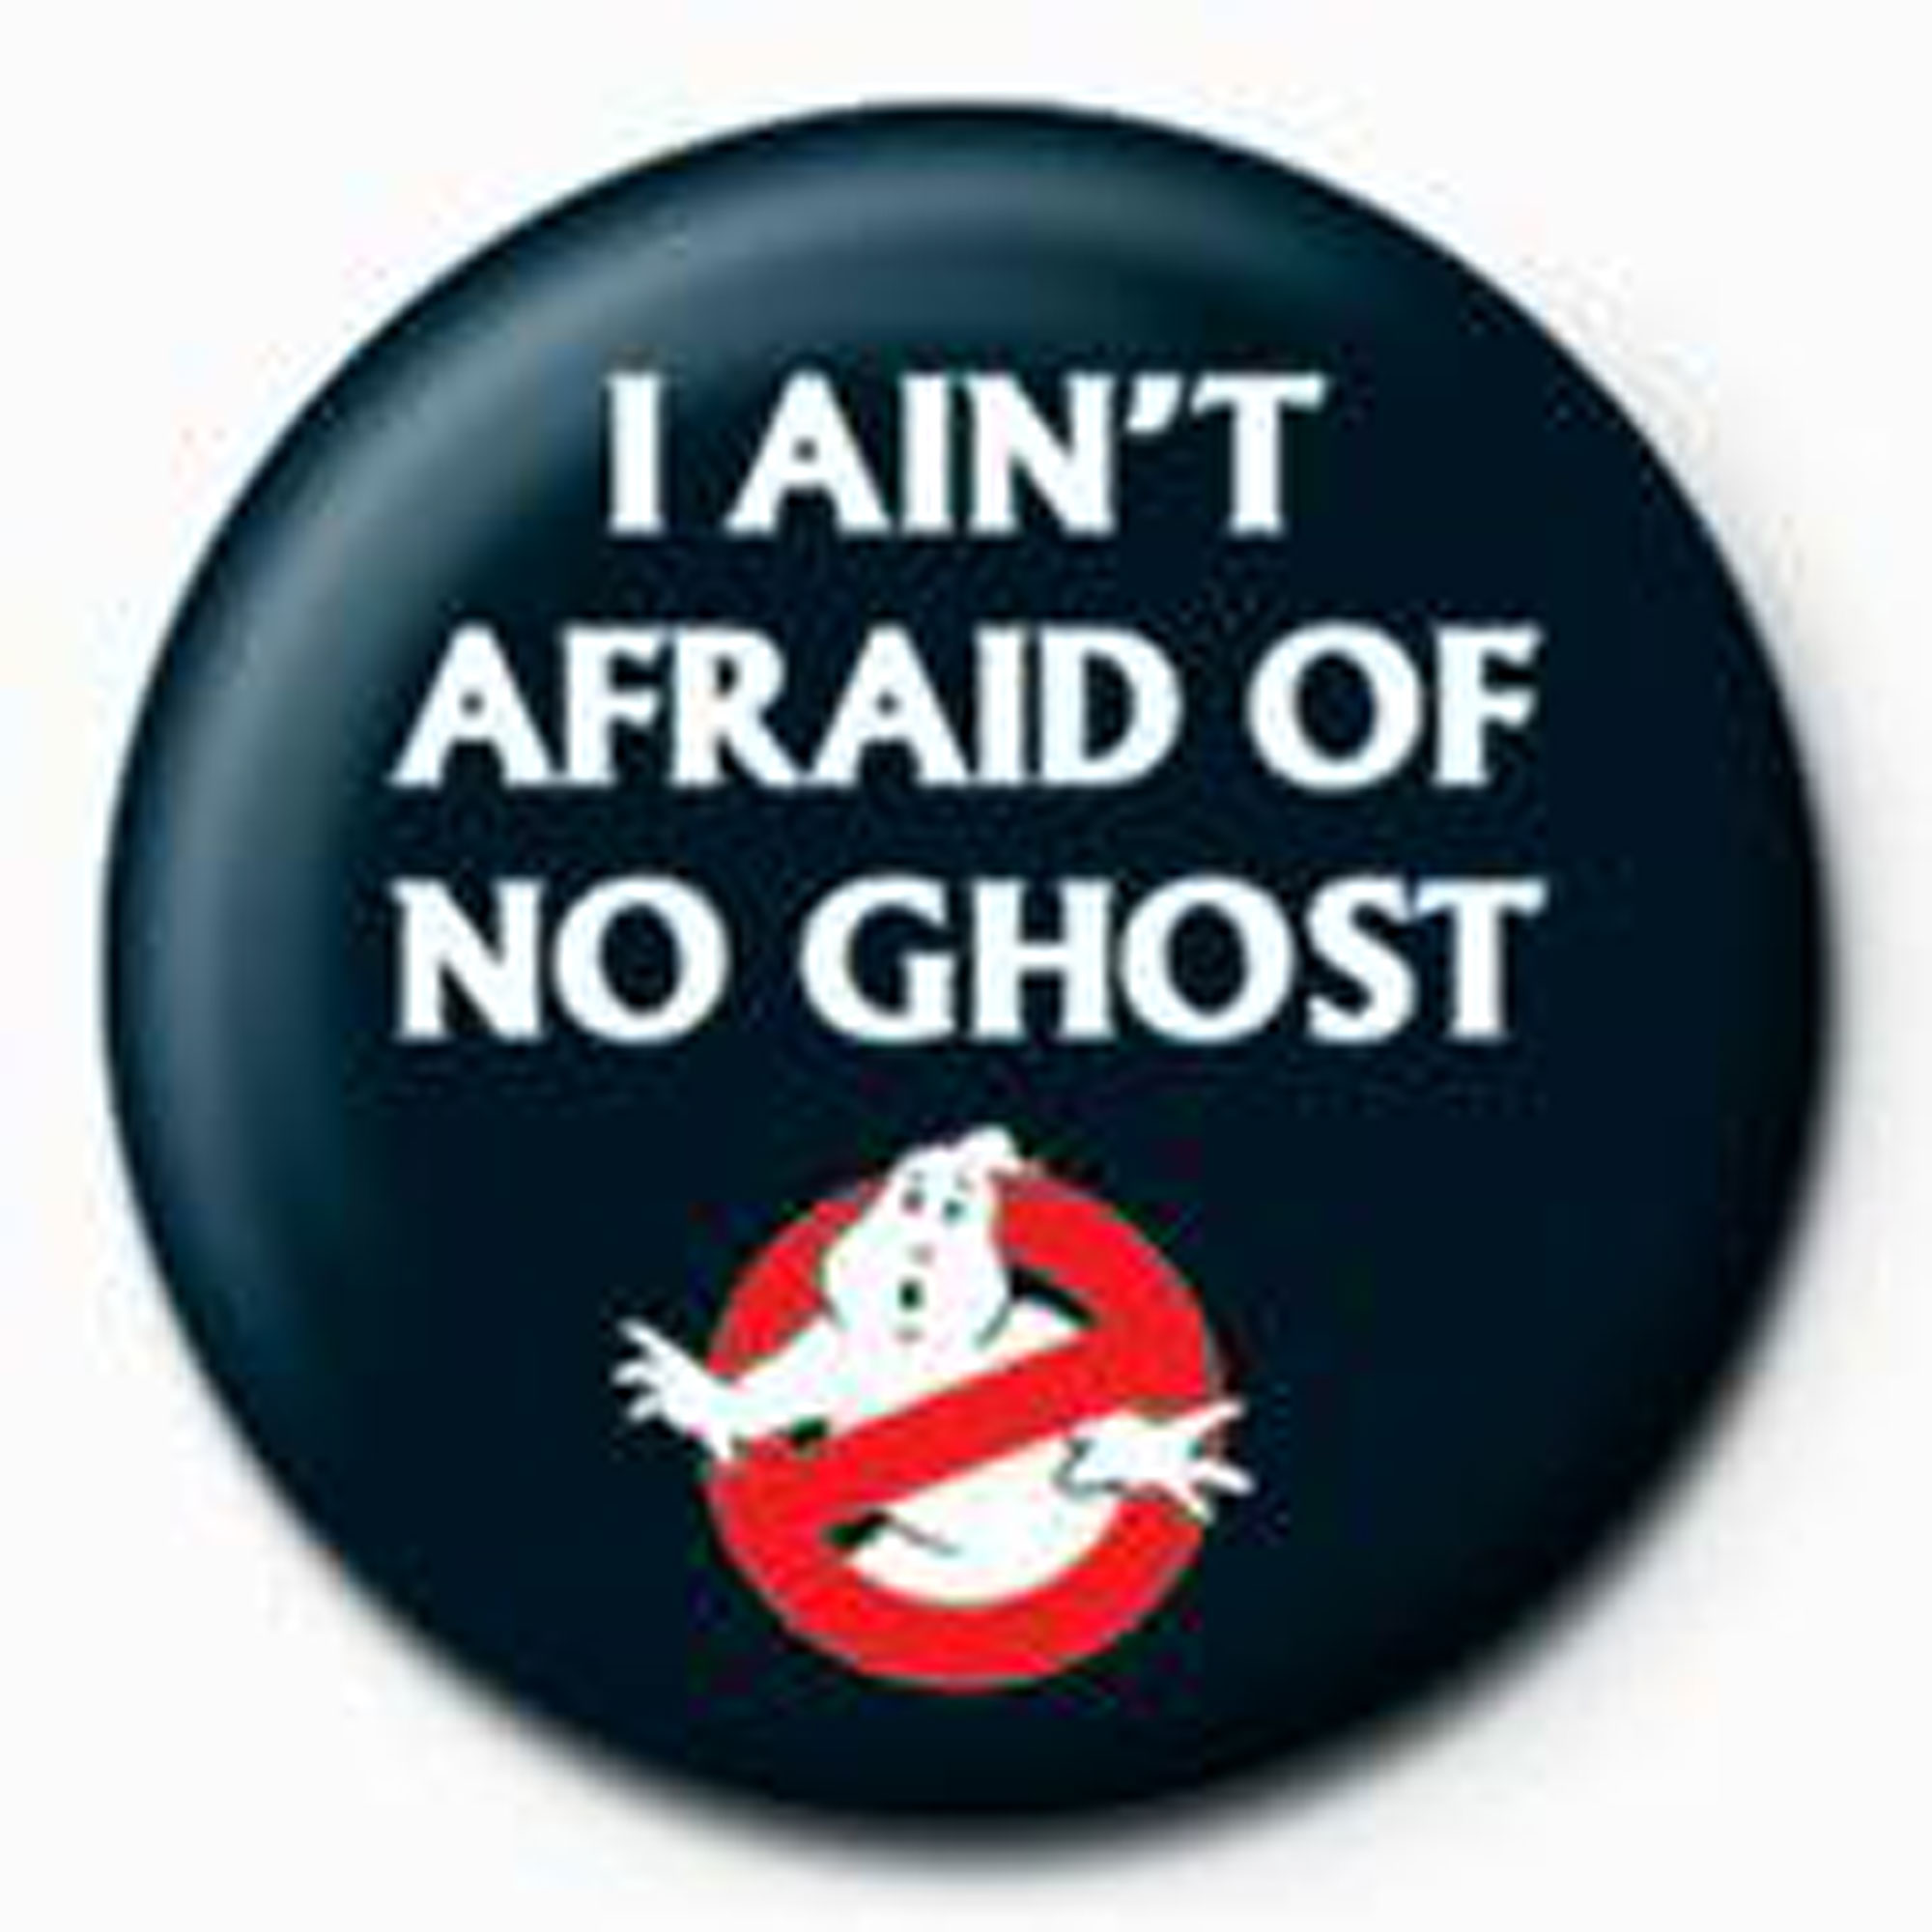 Aint - I Afraid Ghostbusters